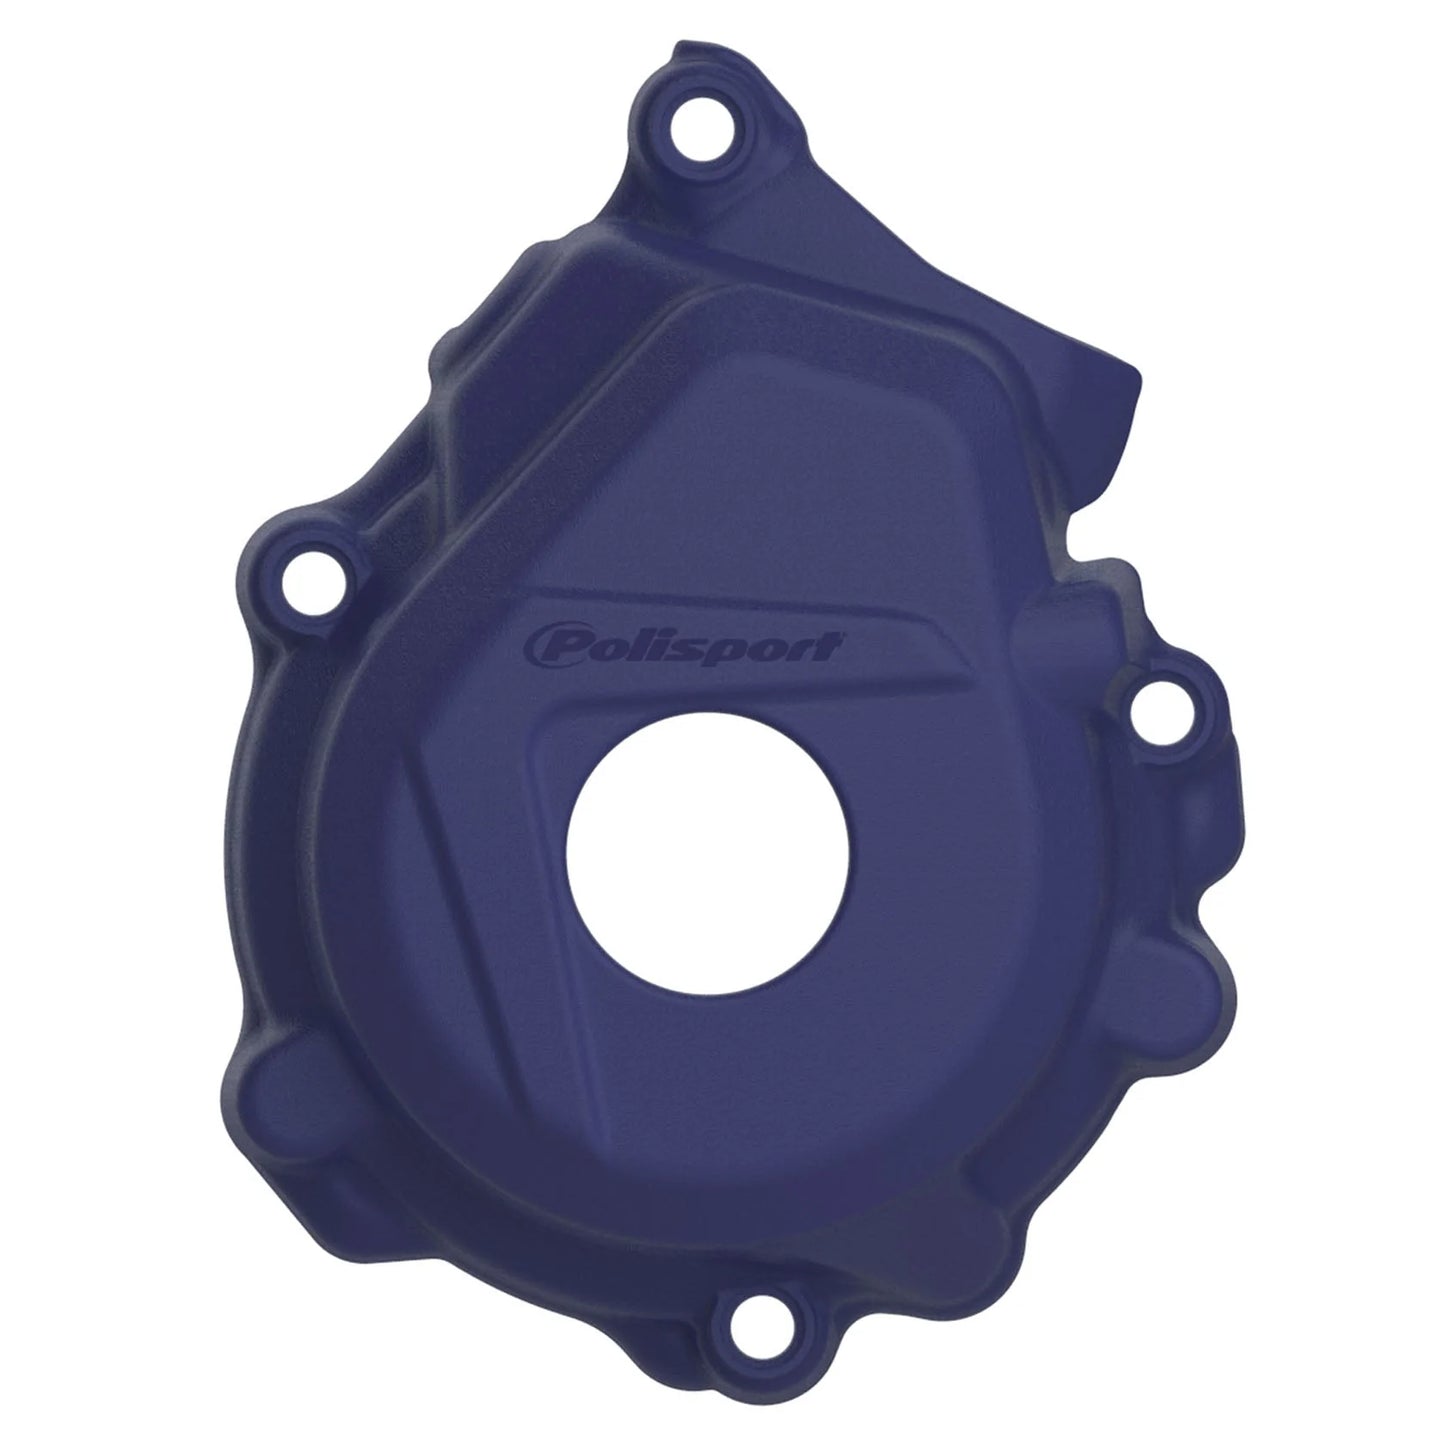 Polisport KTM ignition Cover Protector SXF 250 350 2016 - 2022 Husqvarna FC 250 350 16 - 22, Blue